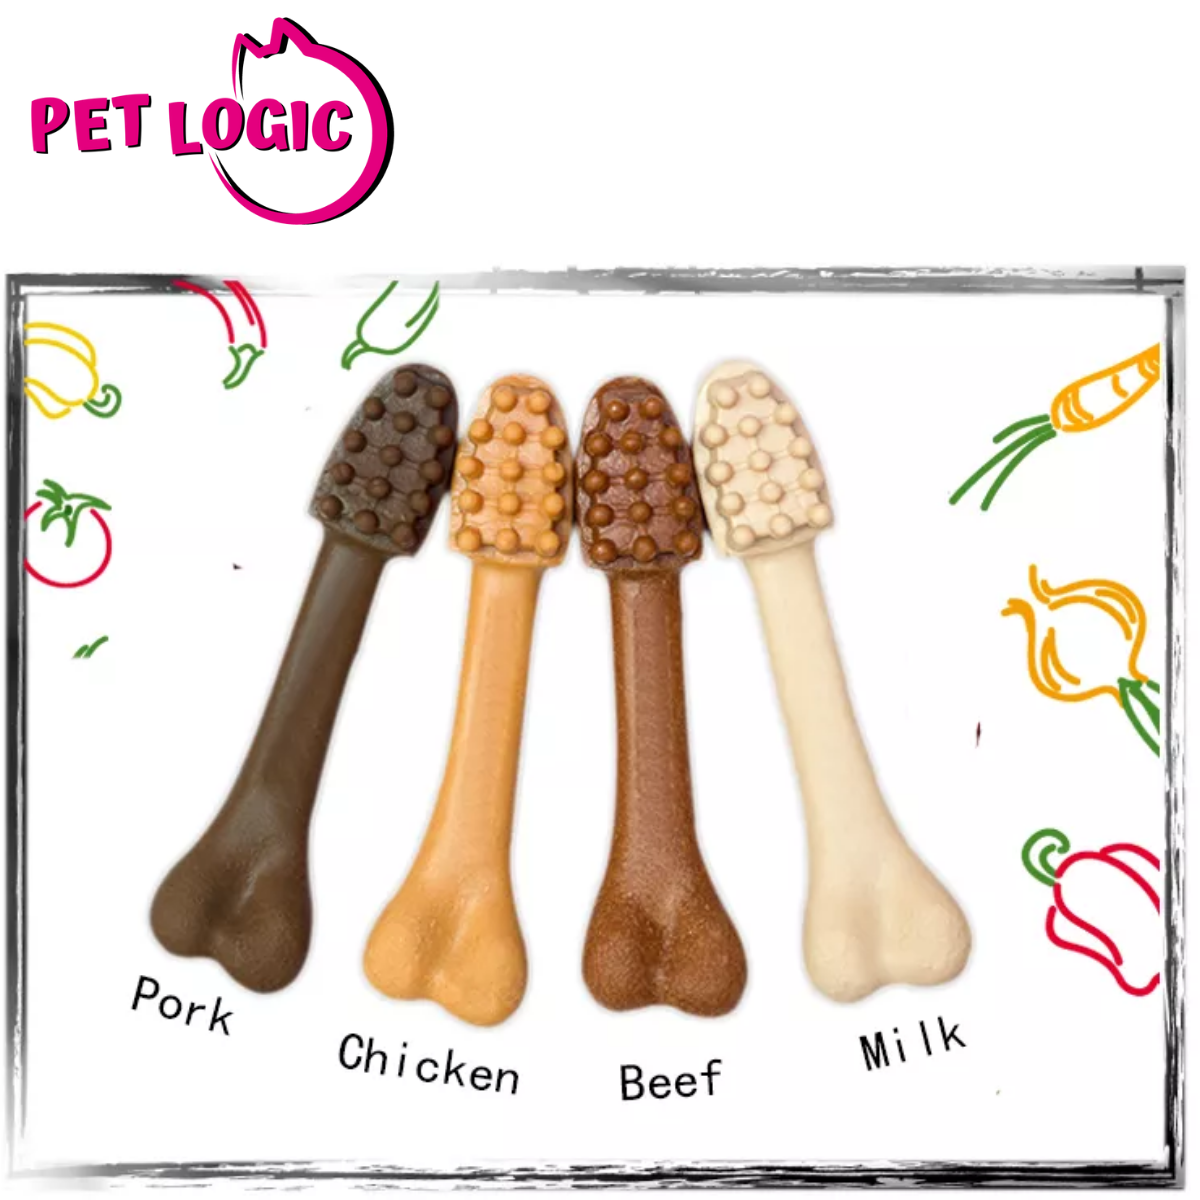 Pet Logic Dental Brush Bones 15g X15 PORK (Pouch) Dog Treats